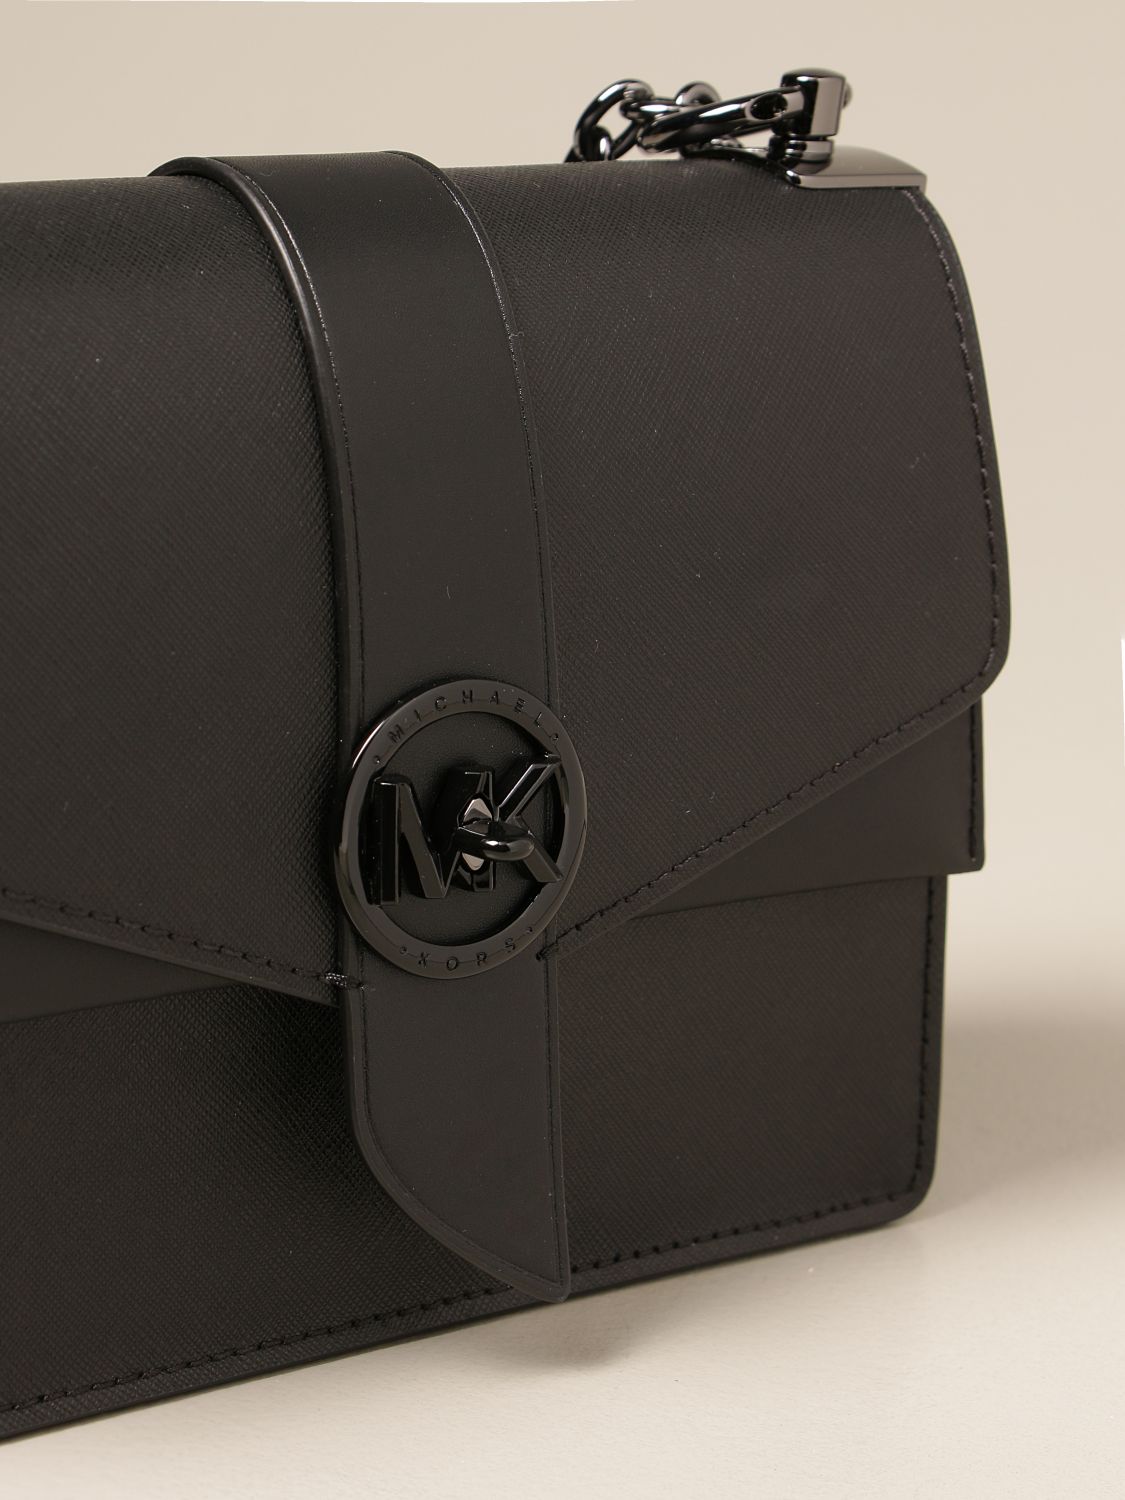 Michael Kors Greenwich Small Saffiano Leather Crossbody Bag (Black):  Handbags: .com